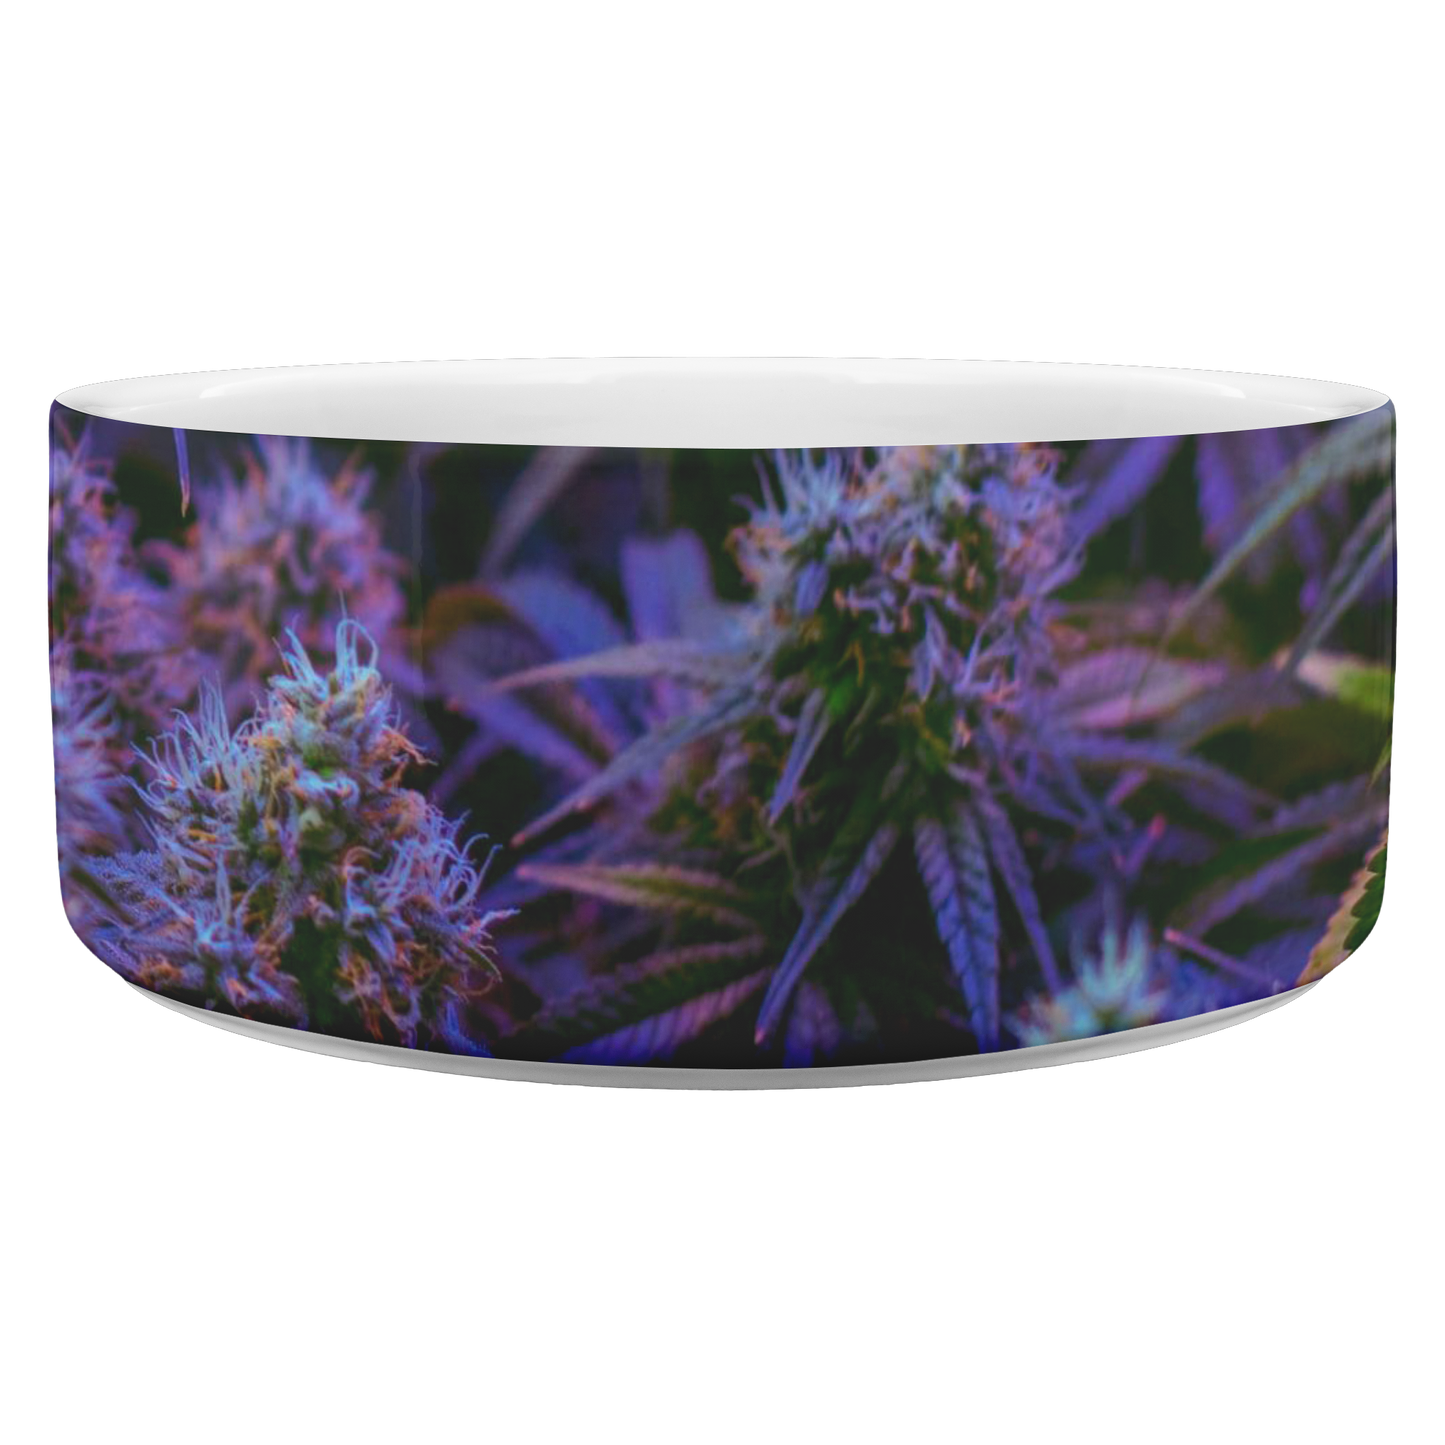 The Purple Cannabis Pet Bowl